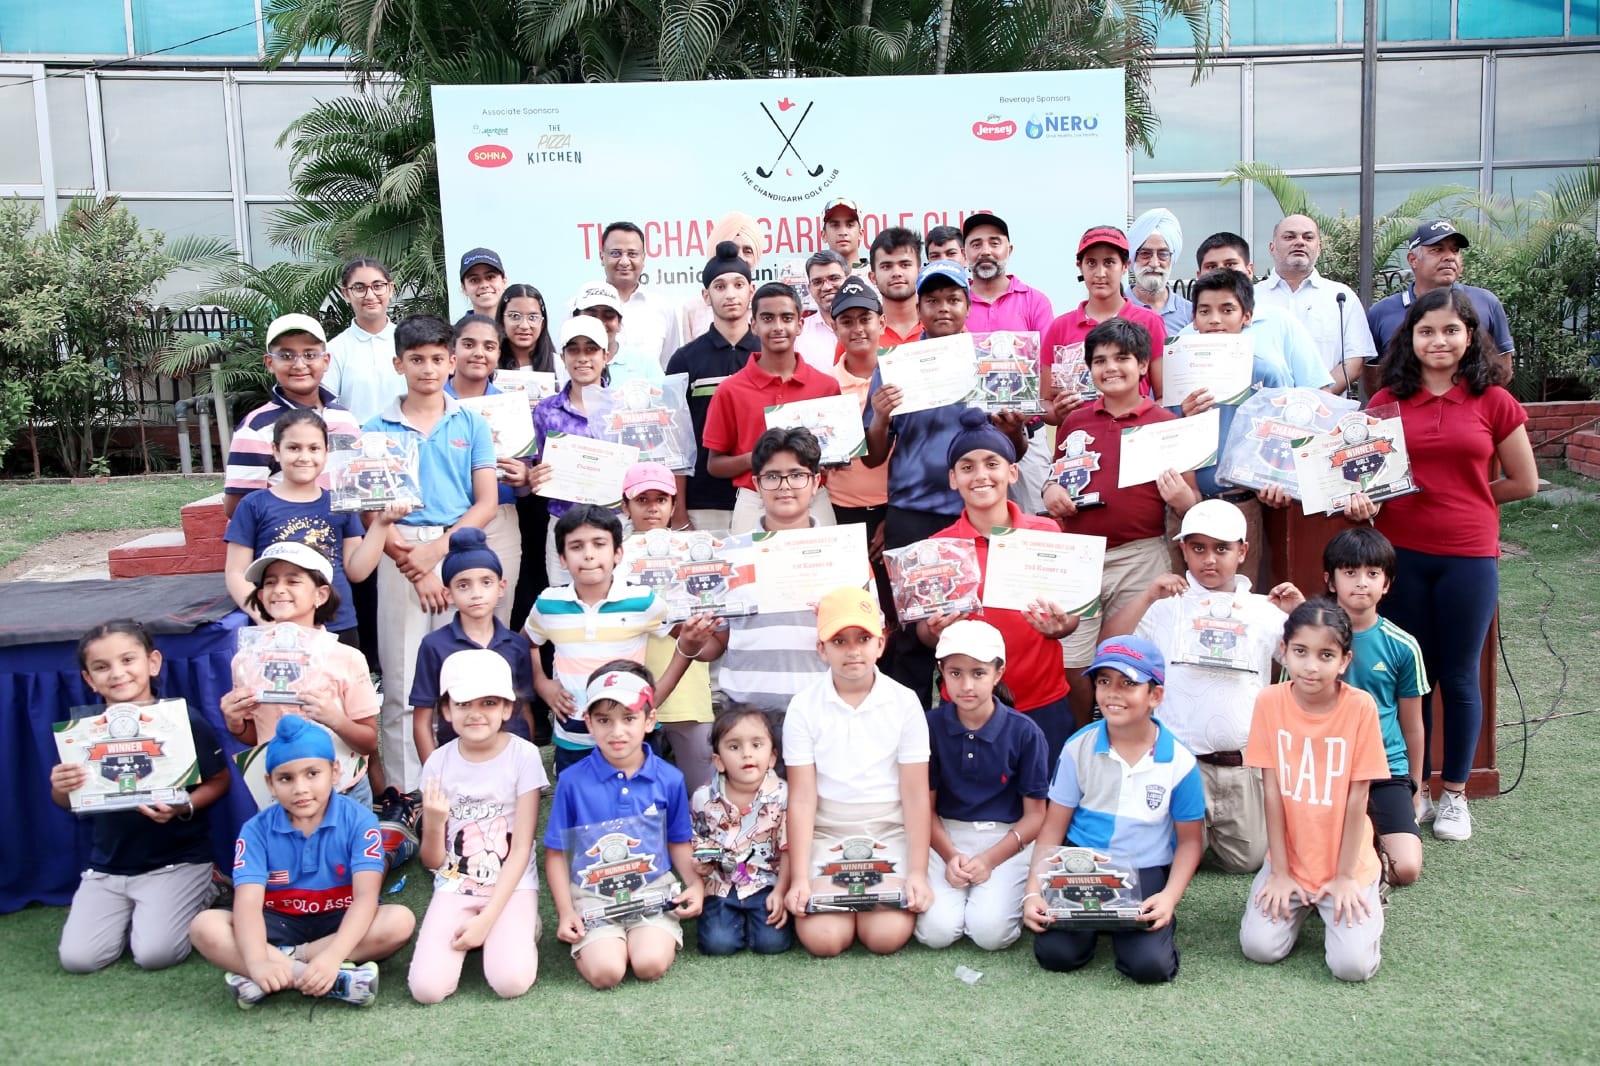 Mehar, Shaurya emerge overall champions in golf tournament